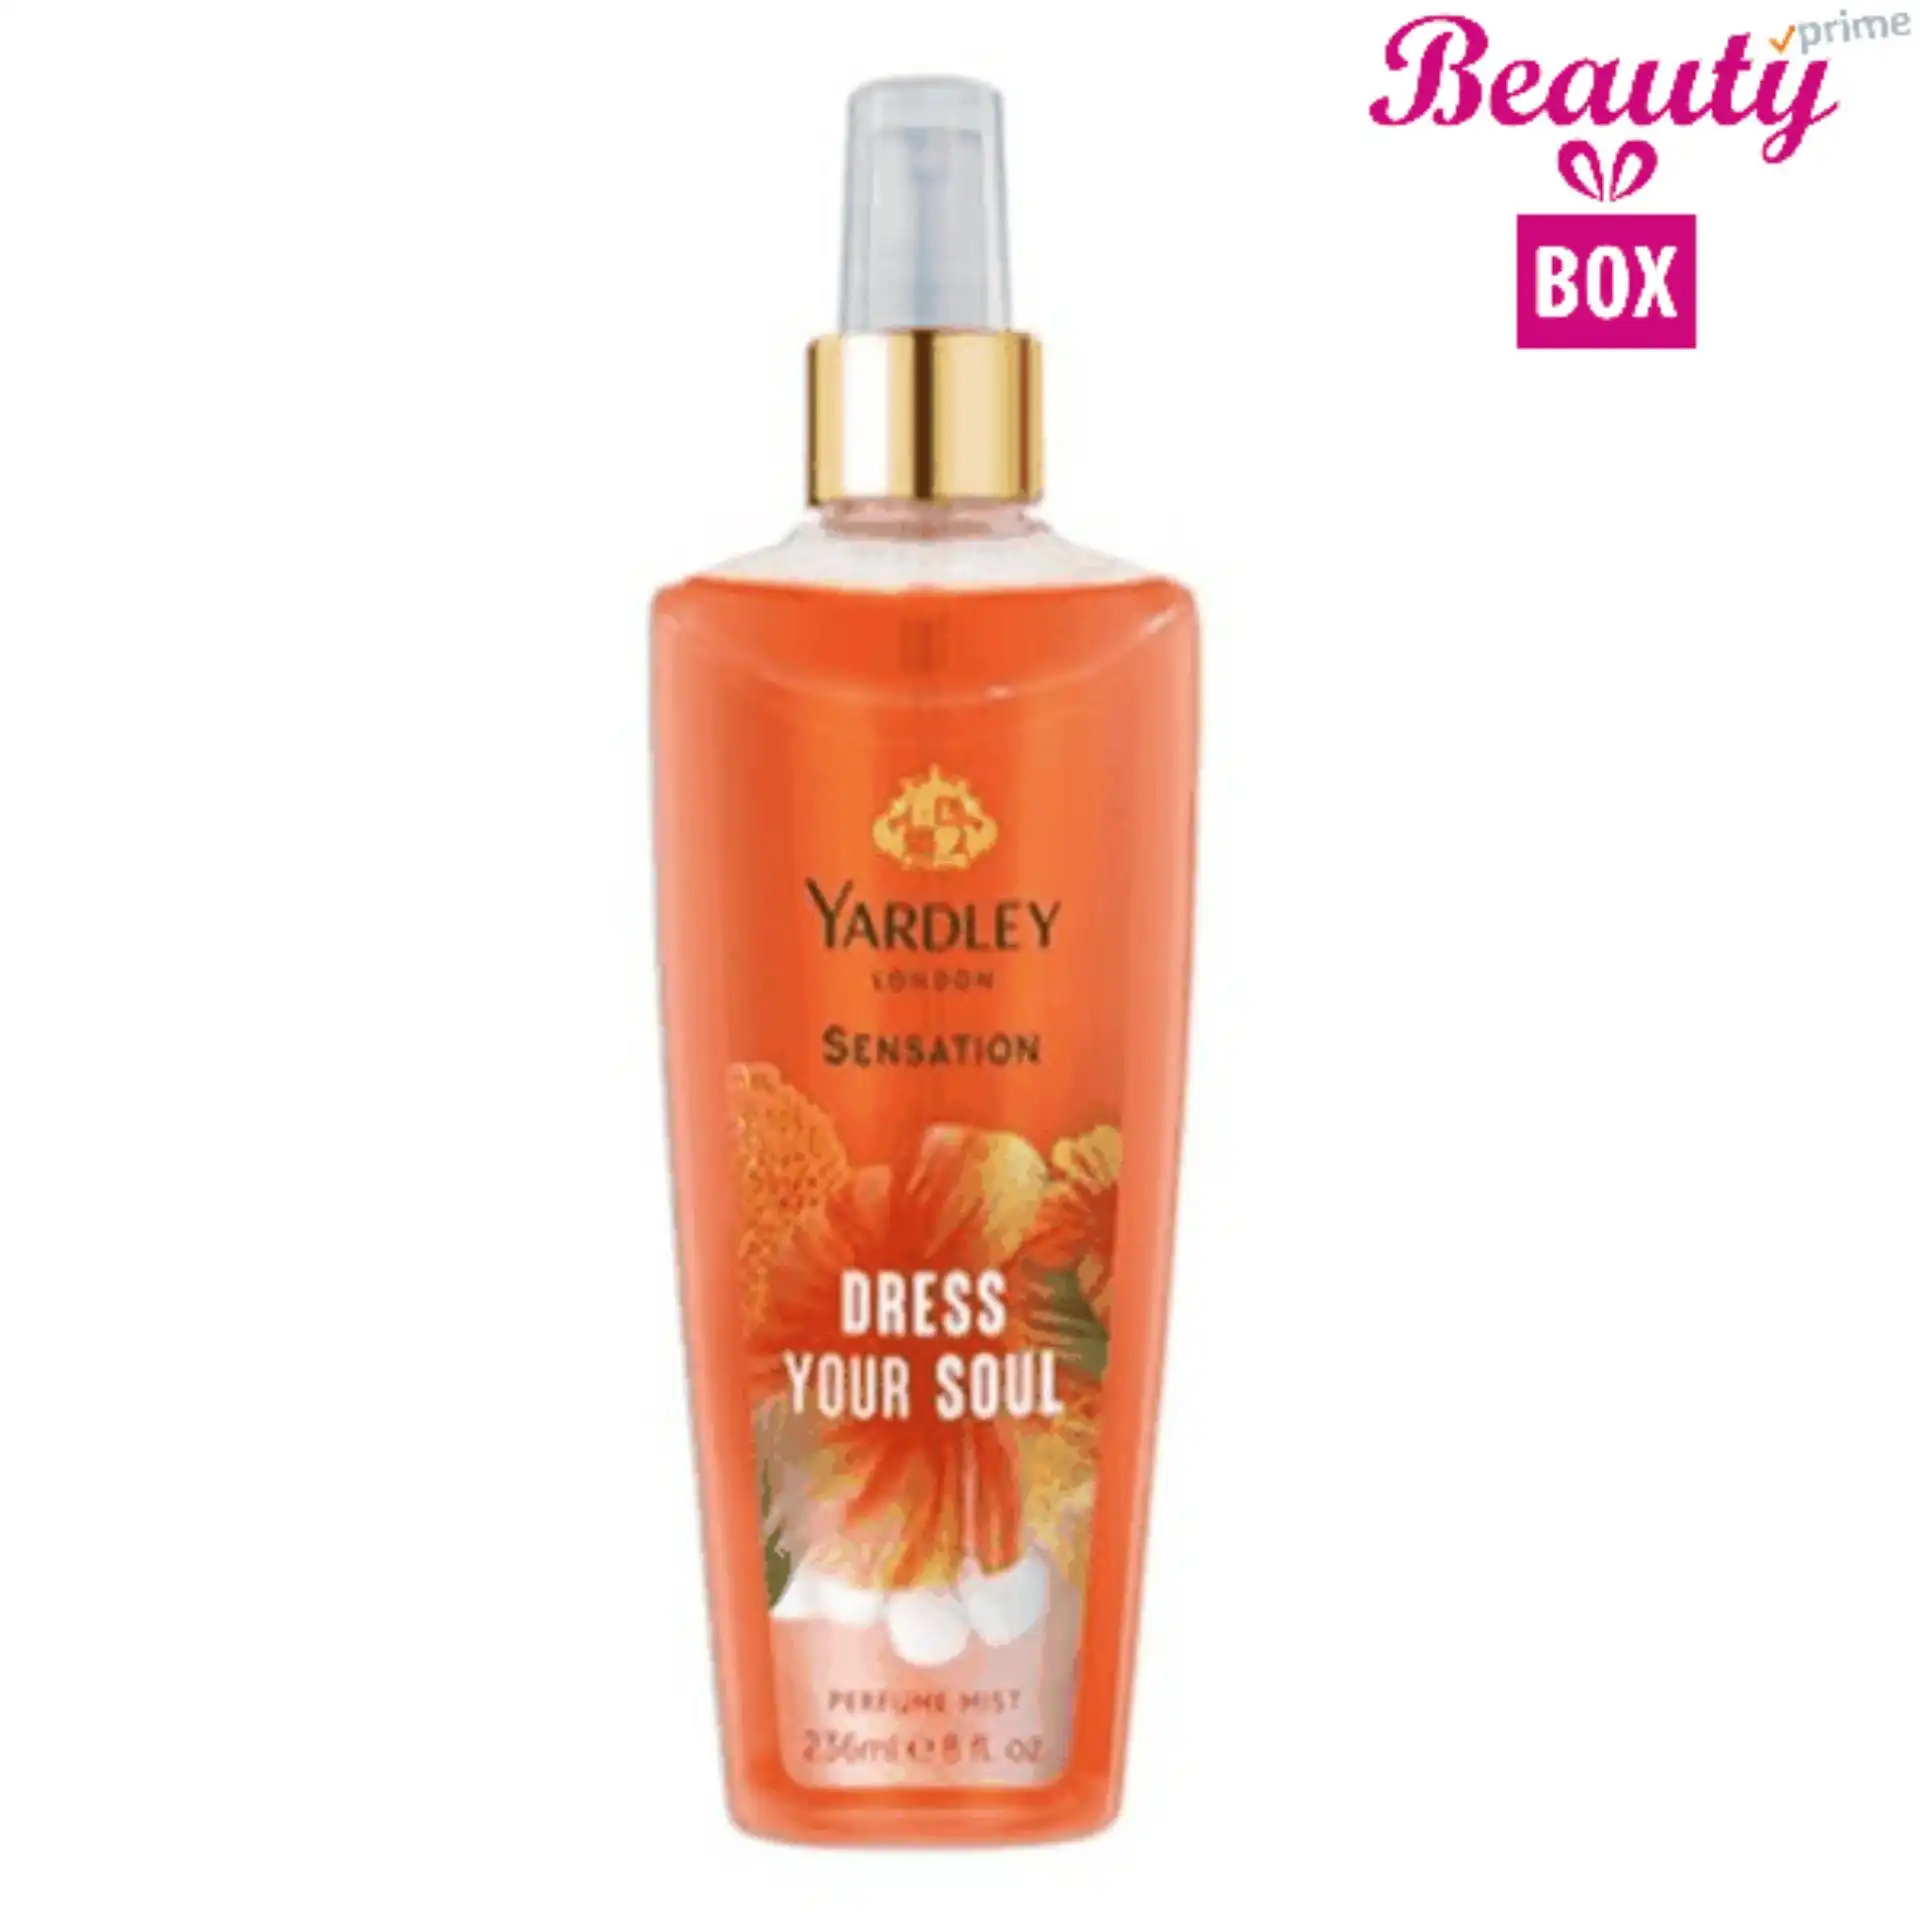 Yardley Dress Your Soul Perfume Mist - 236 Ml